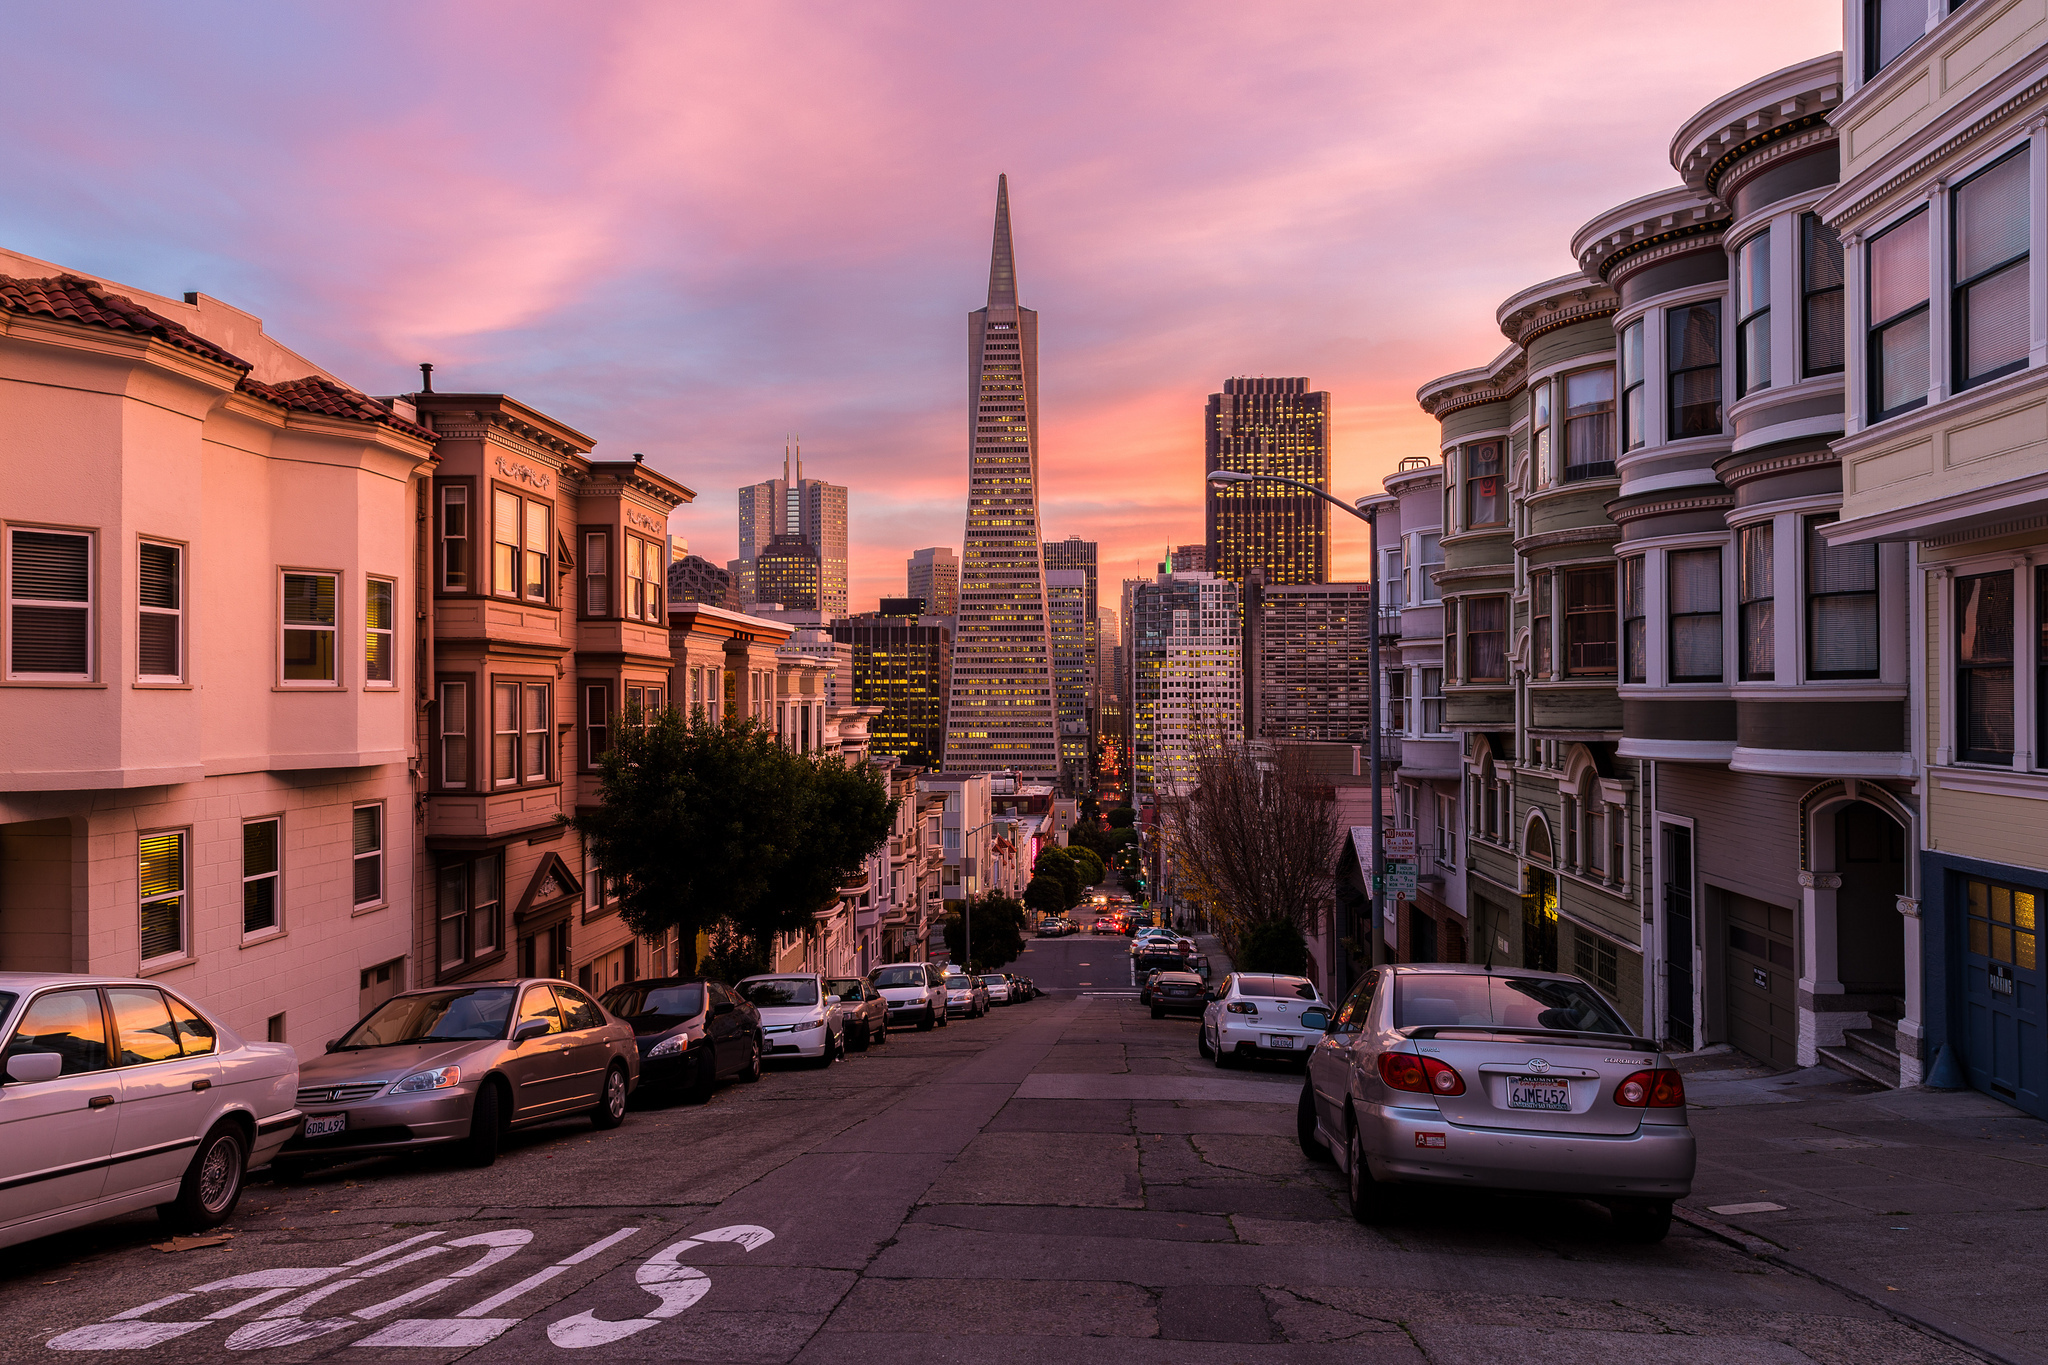 San Francisco Images. 